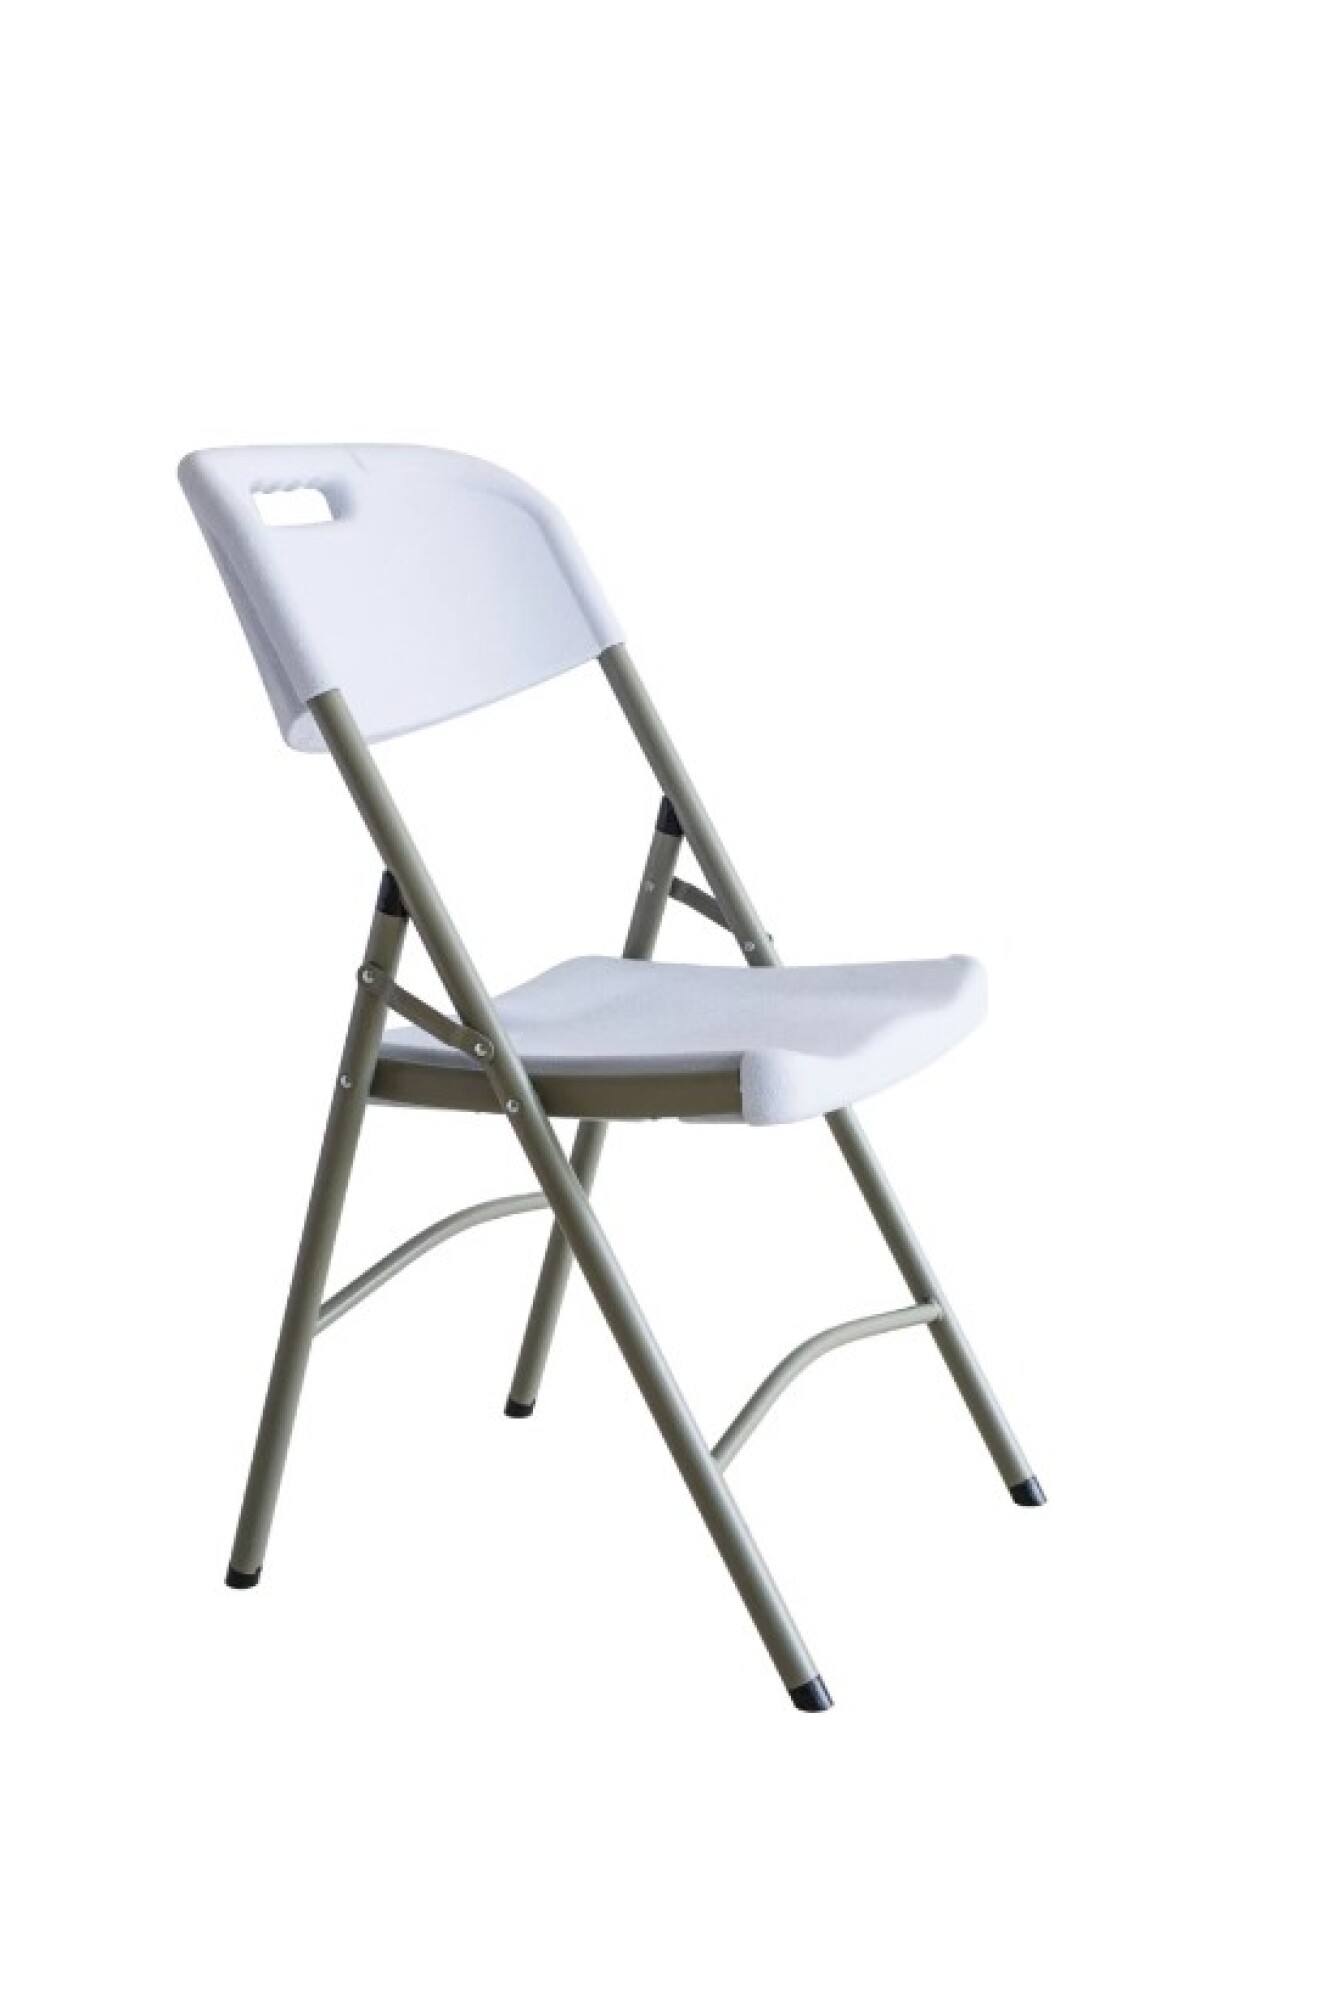  Cómoda silla para exteriores, sillas plegables de